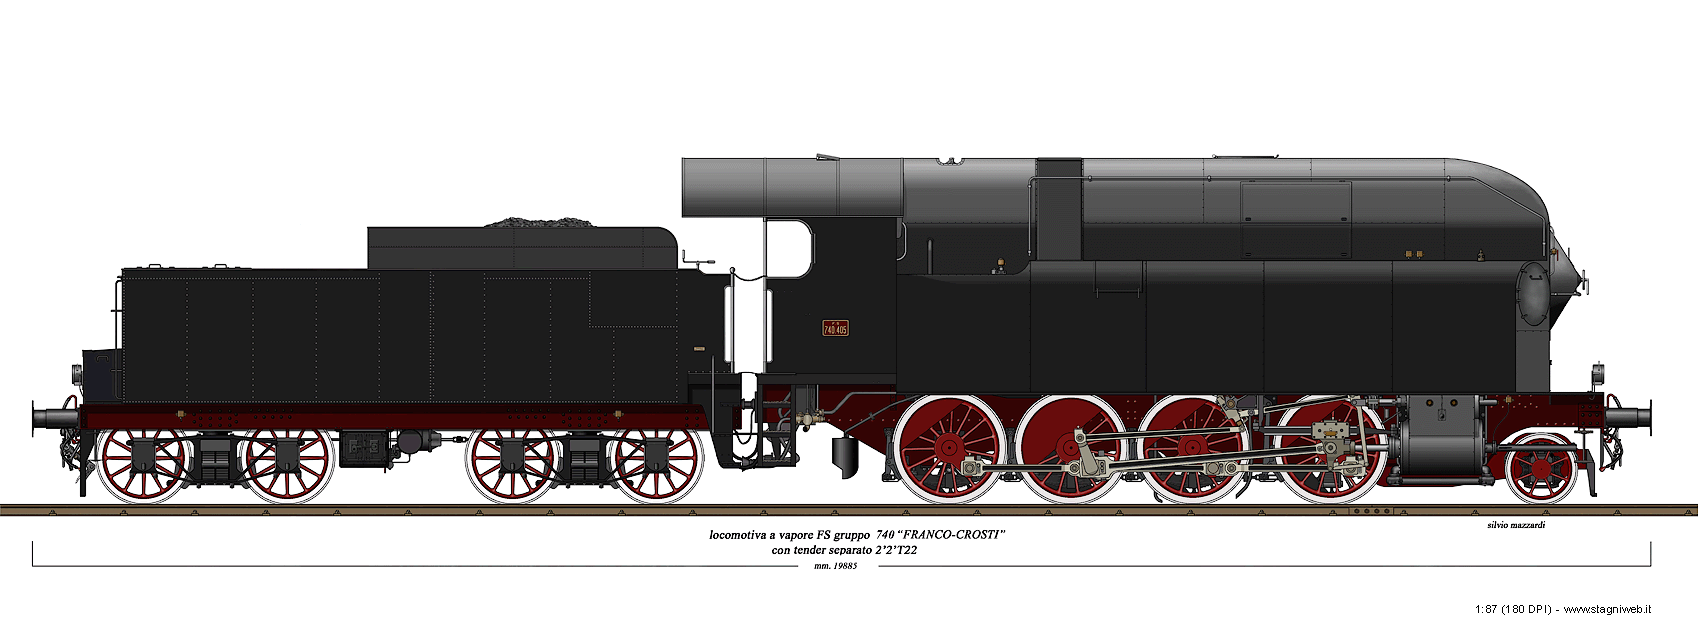 Locomotive a vapore - Gr. 740 Franco-Crosti